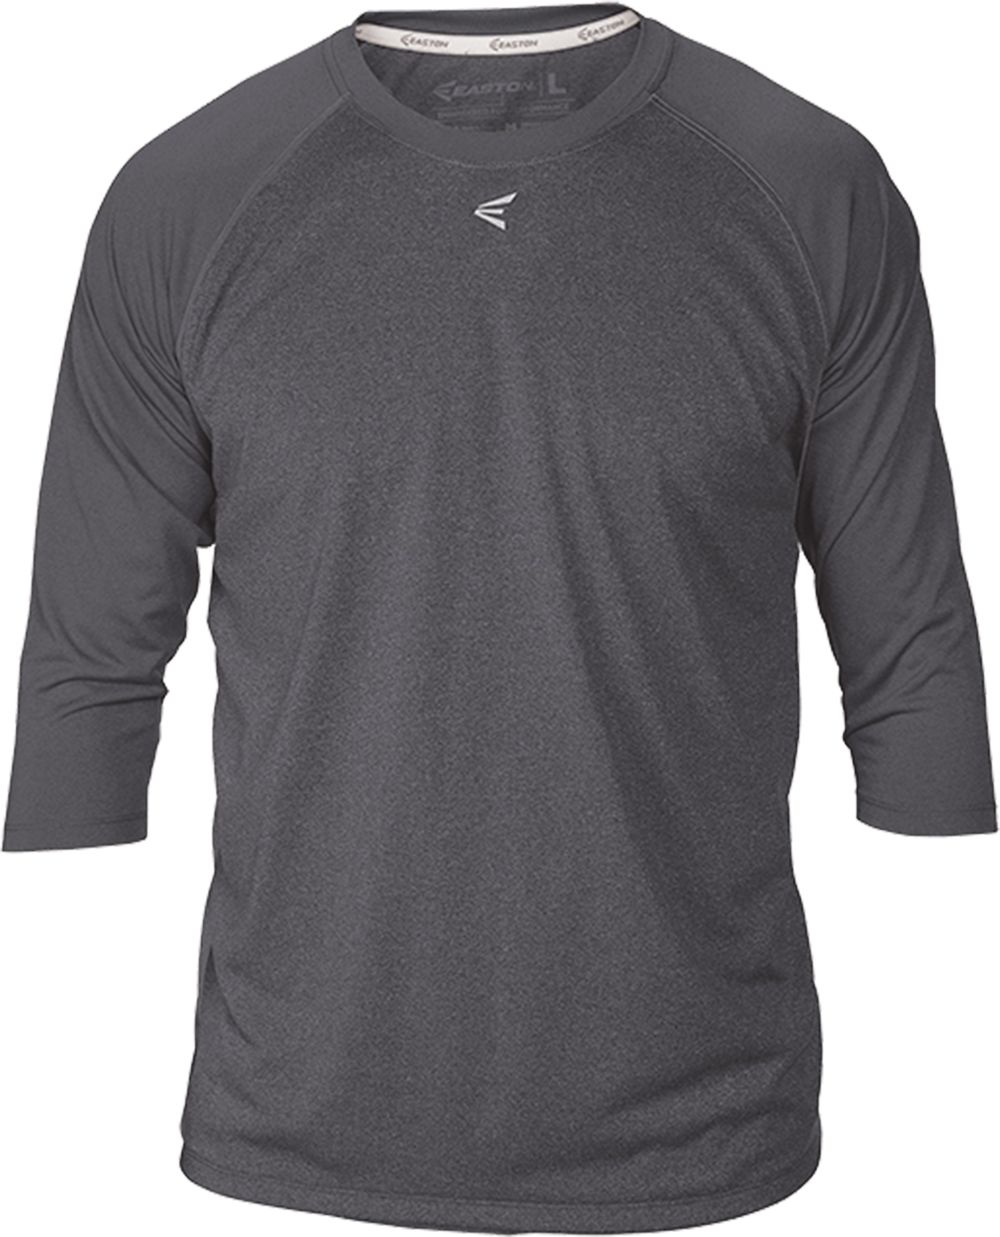 Baseball Shirts & Jackets | DICK'S Sporting Goods